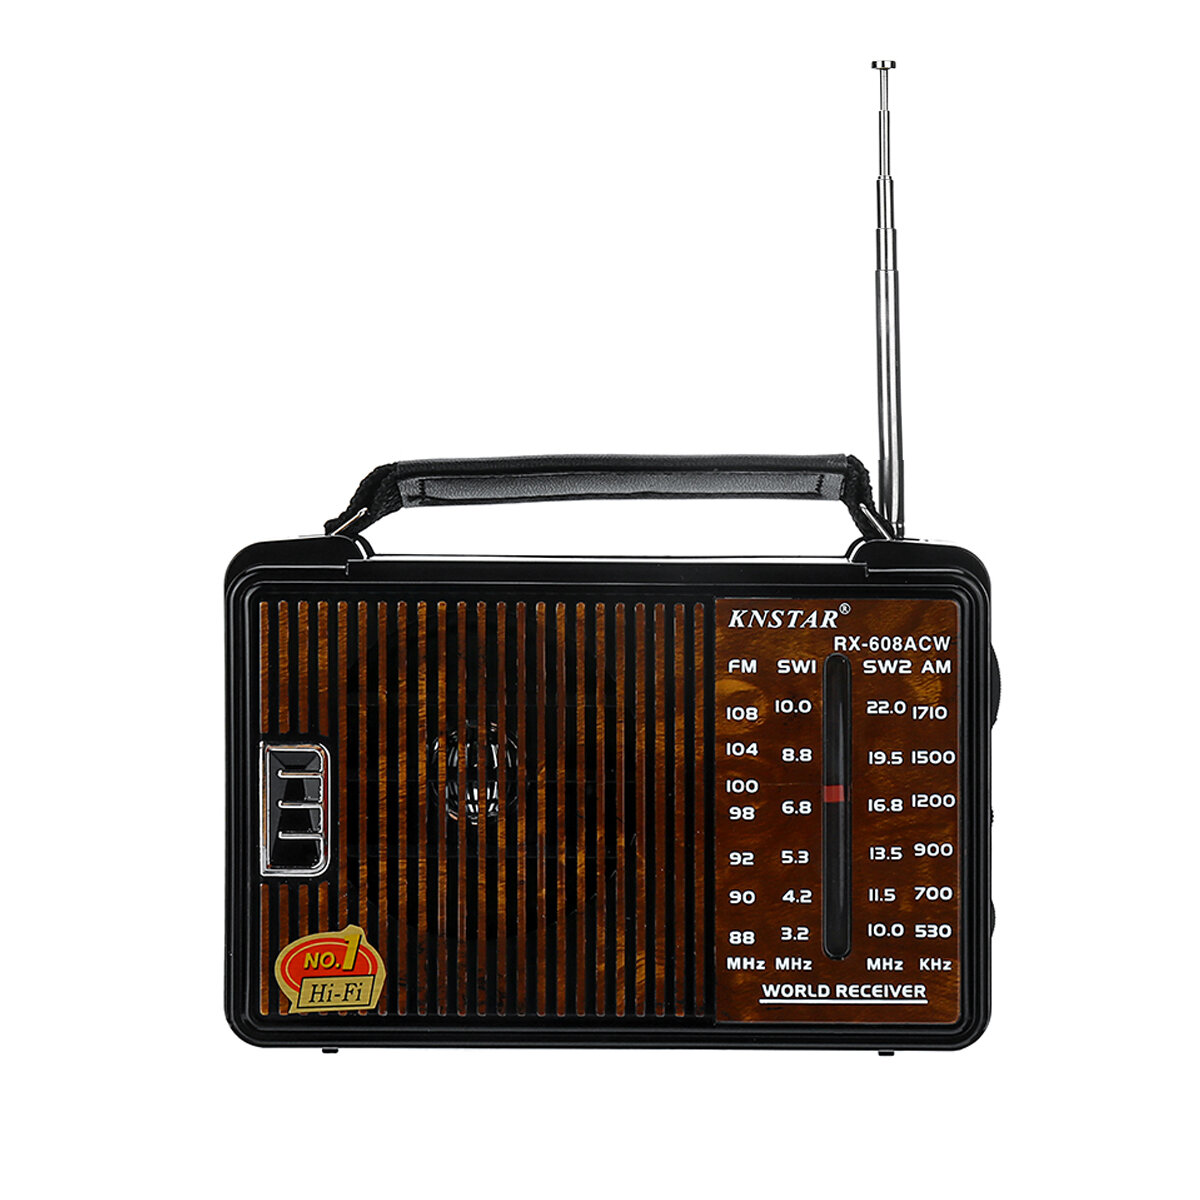 

RX-608AC Portable Retro FM AM SW1 SW2 Radio 4 Band Loud Volume Radio Handheld Speaker